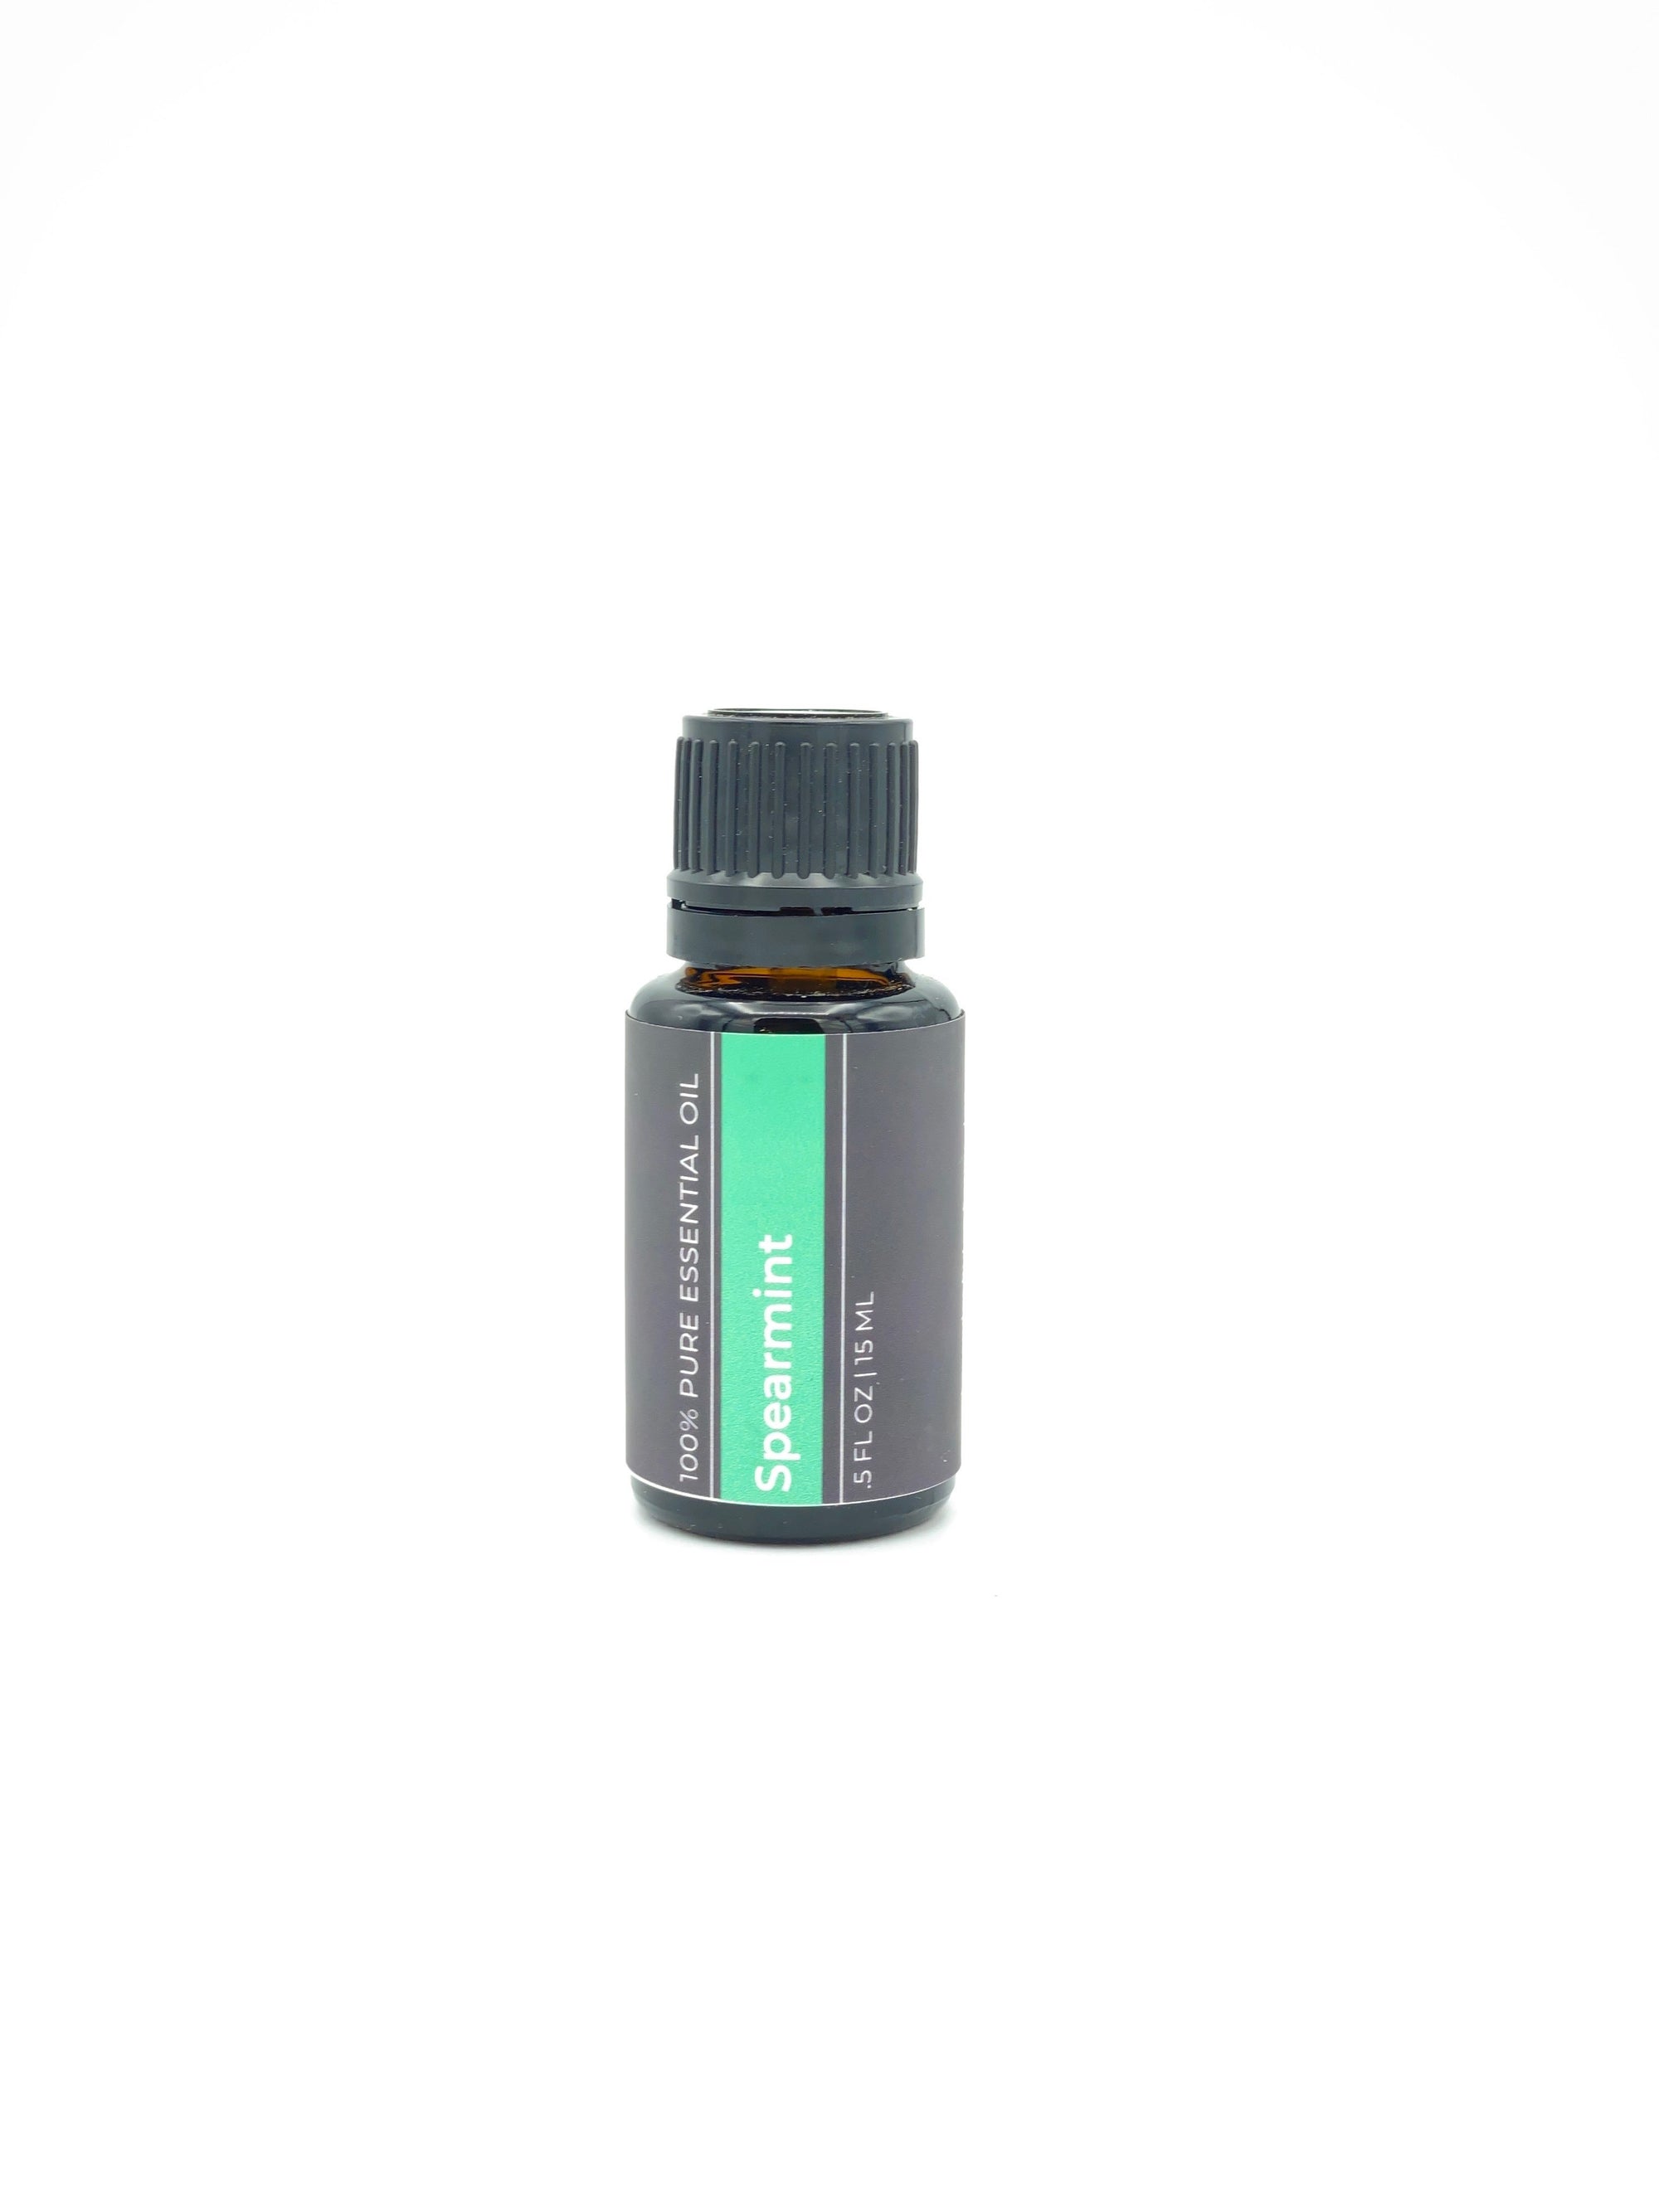 100% Pure Spearmint Essential Oil from Lavender Ridge Farms